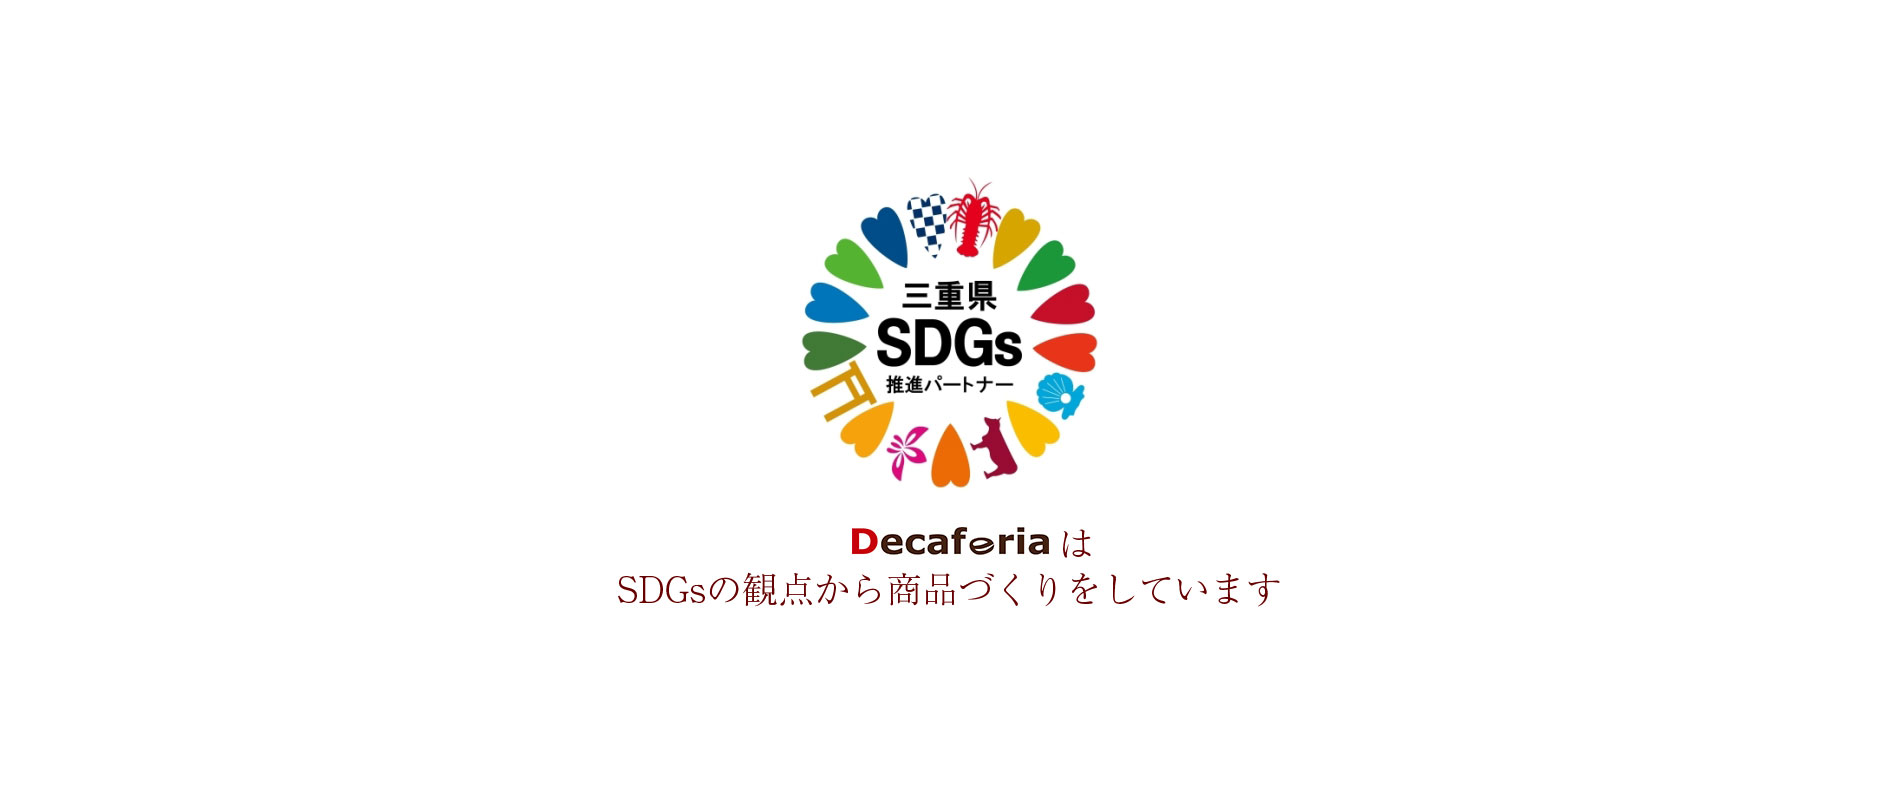 Decaferiaスライド　三重県SDGs